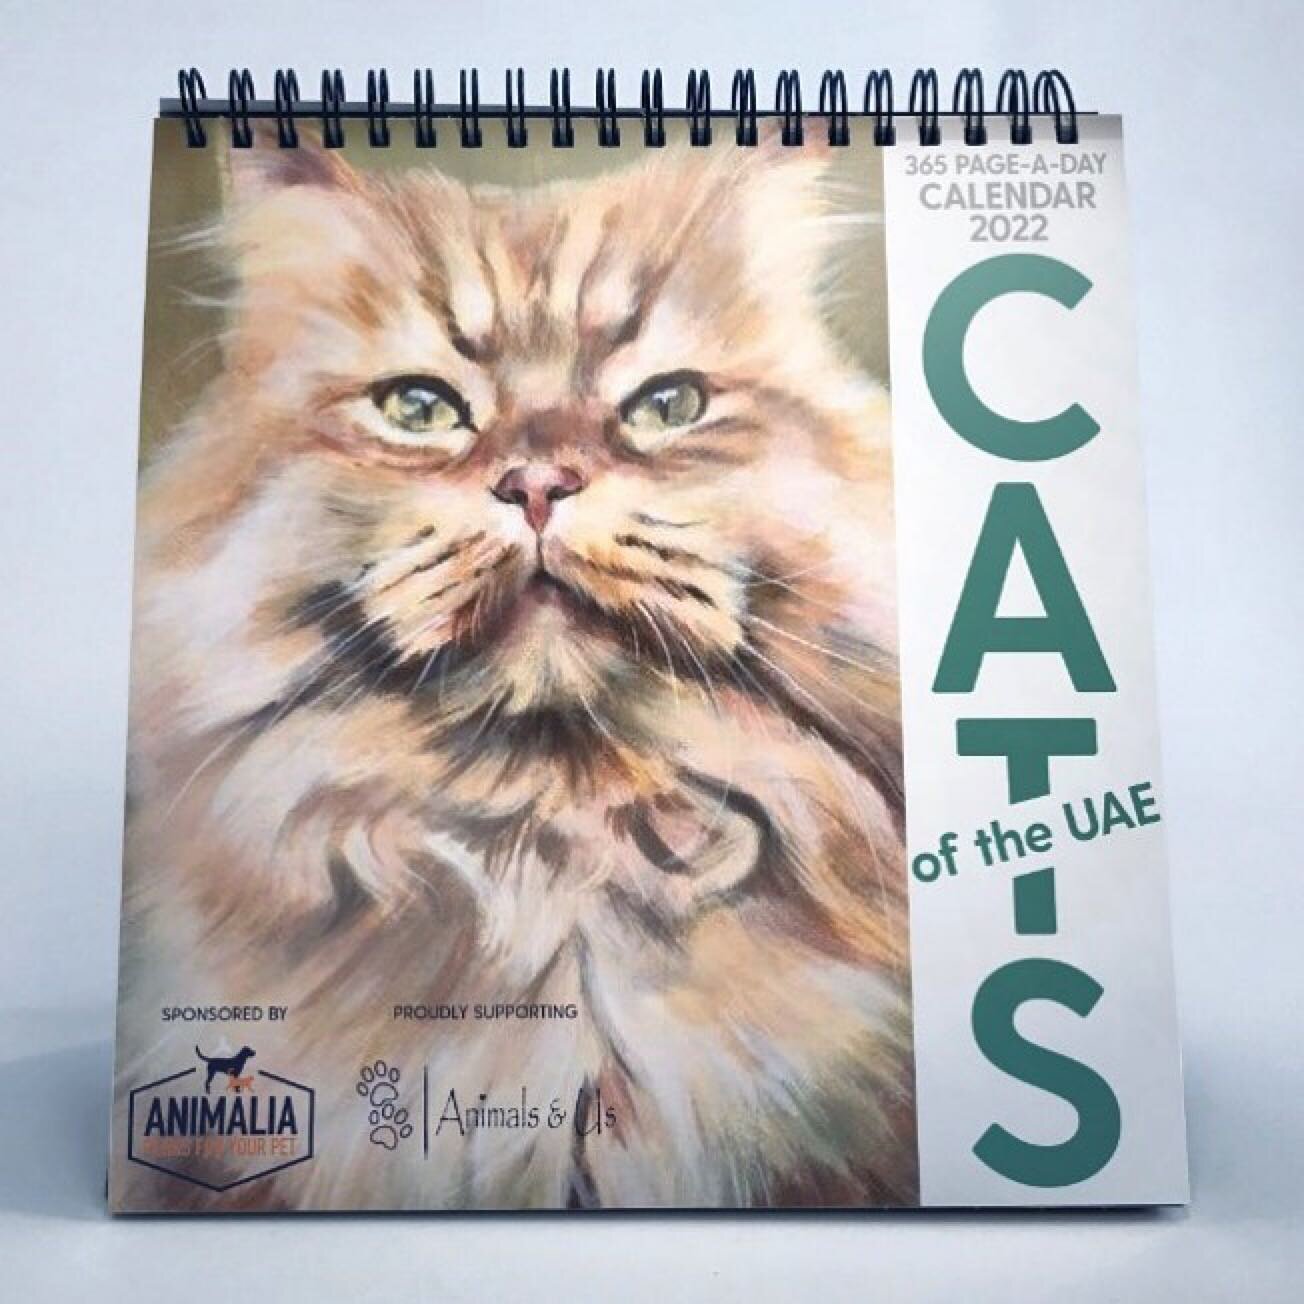 IT&rsquo;S BACK! Cats of the UAE Calendar 2022&hellip; details coming soon #calendar #2022 #expo2020dubai #catsuae #cats #catsdubai #catsindubai #uaecats @alexgoddardart @myanimaliaclub